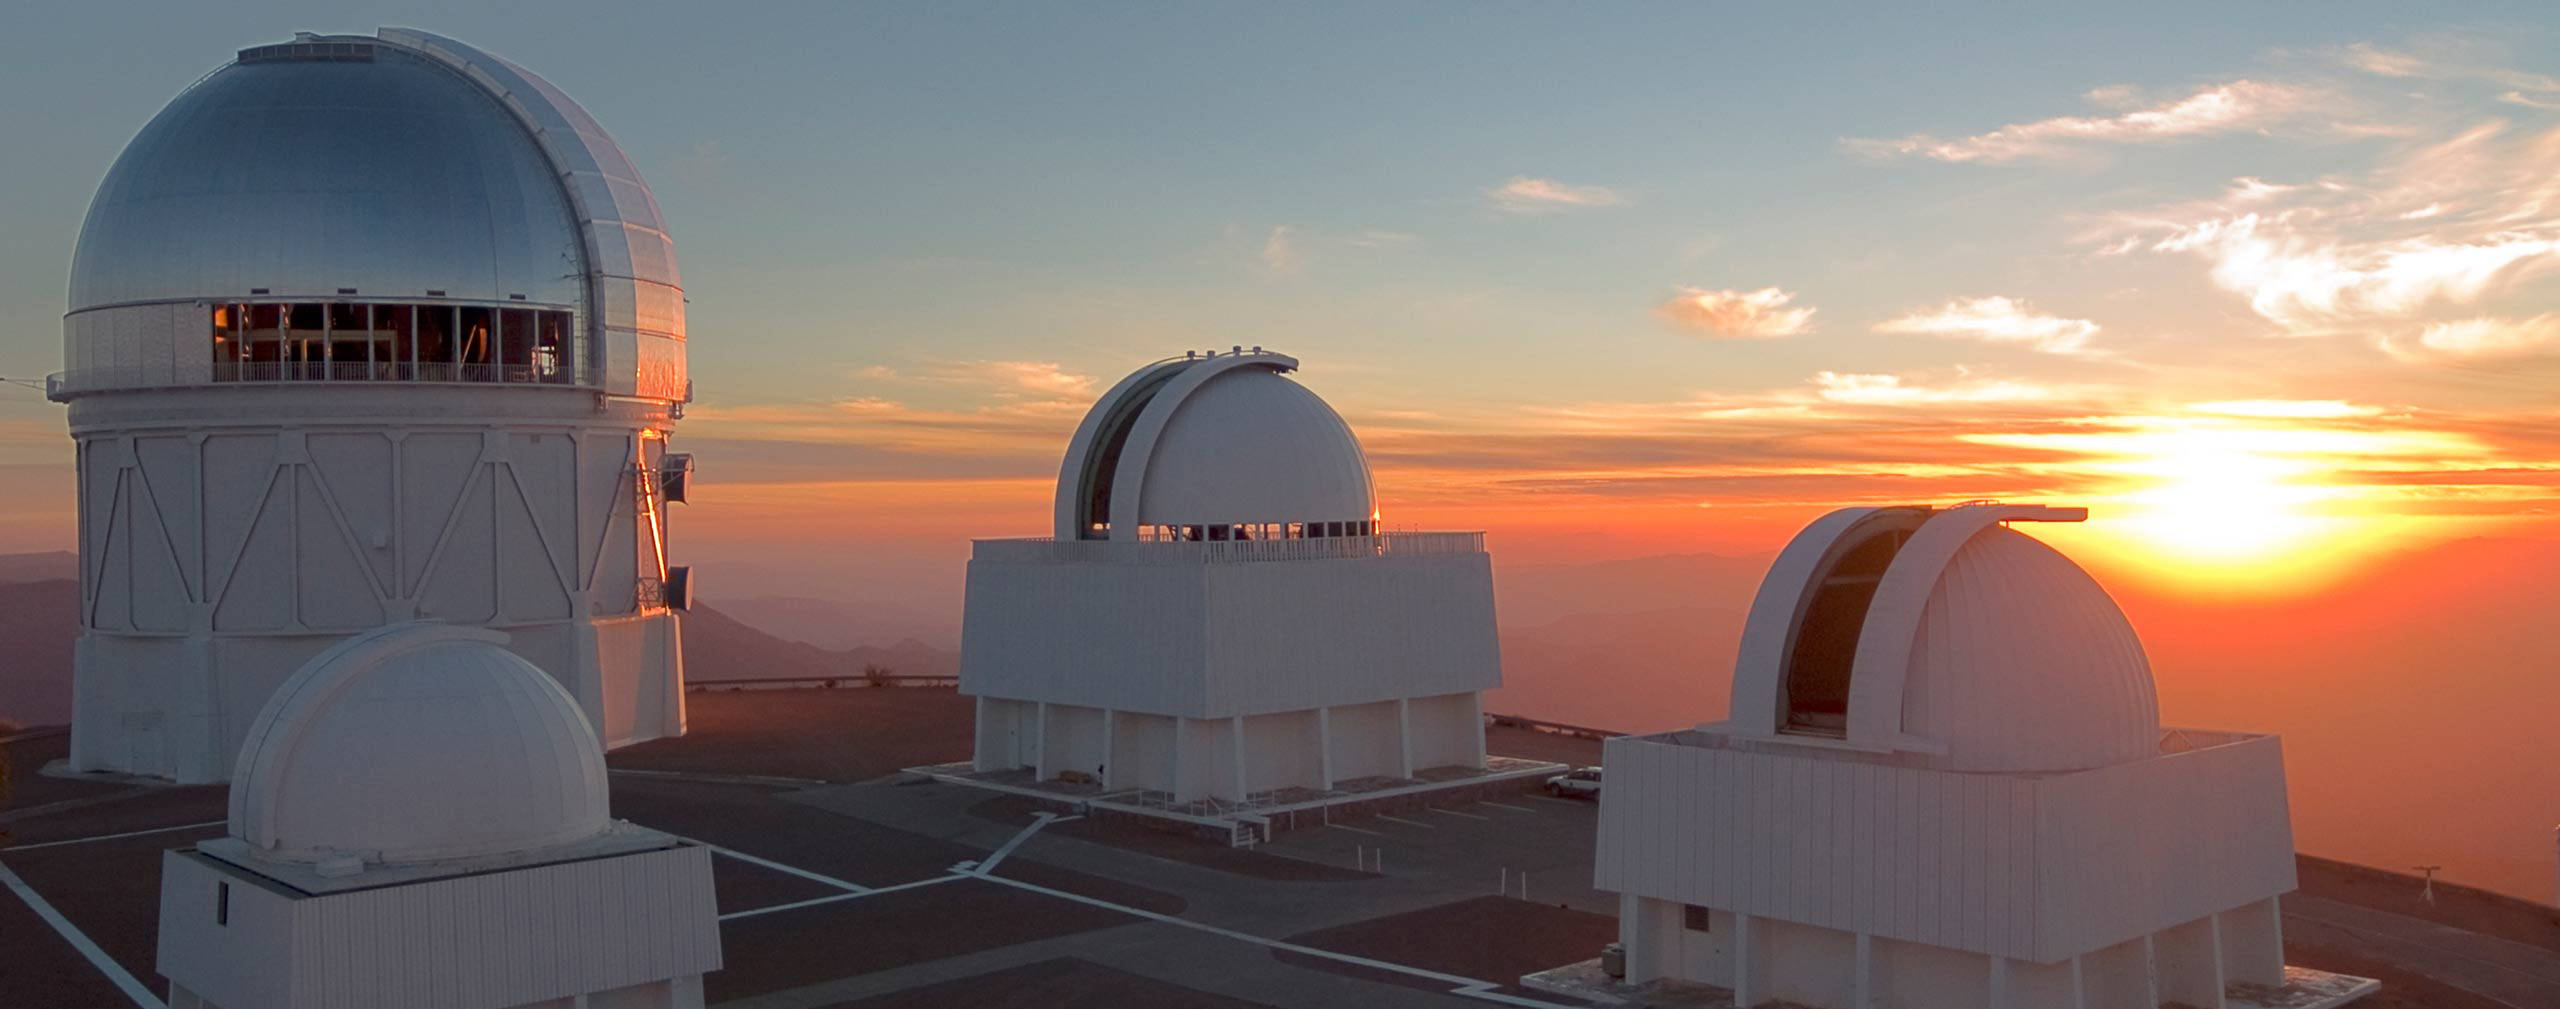 CTIO telescopes at sunset